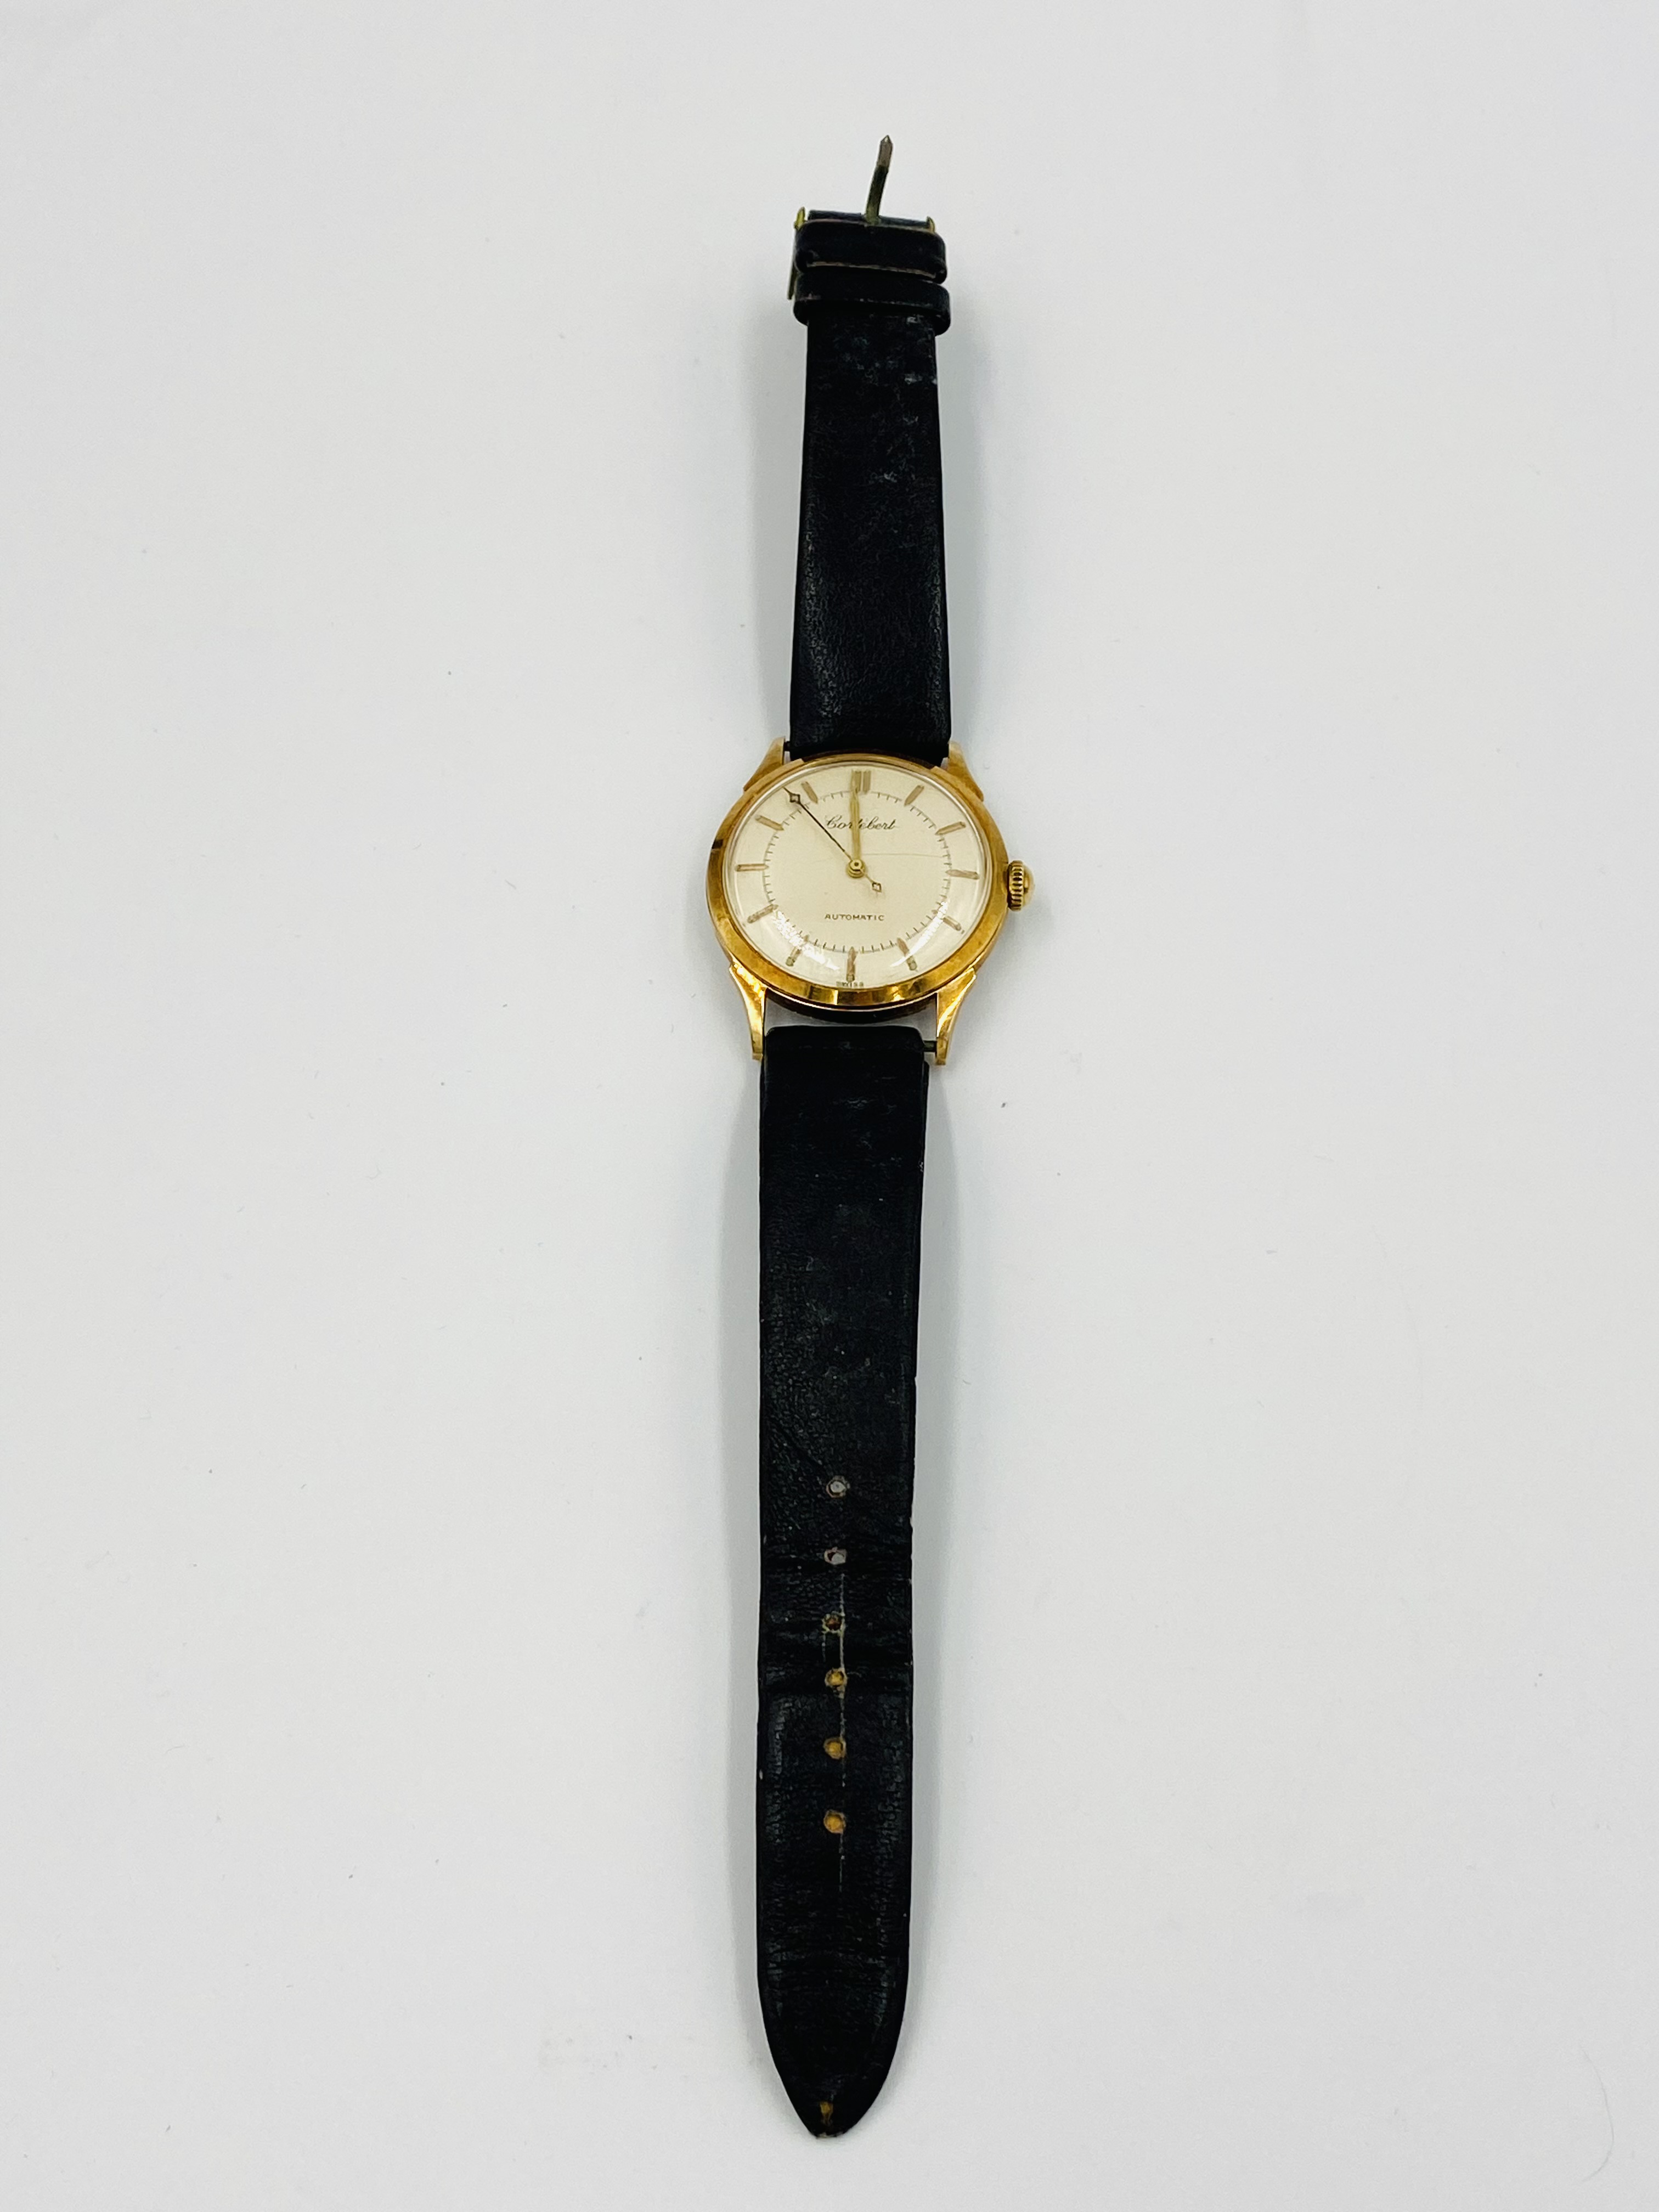 Cortebert automatic gents wristwatch - Image 4 of 4